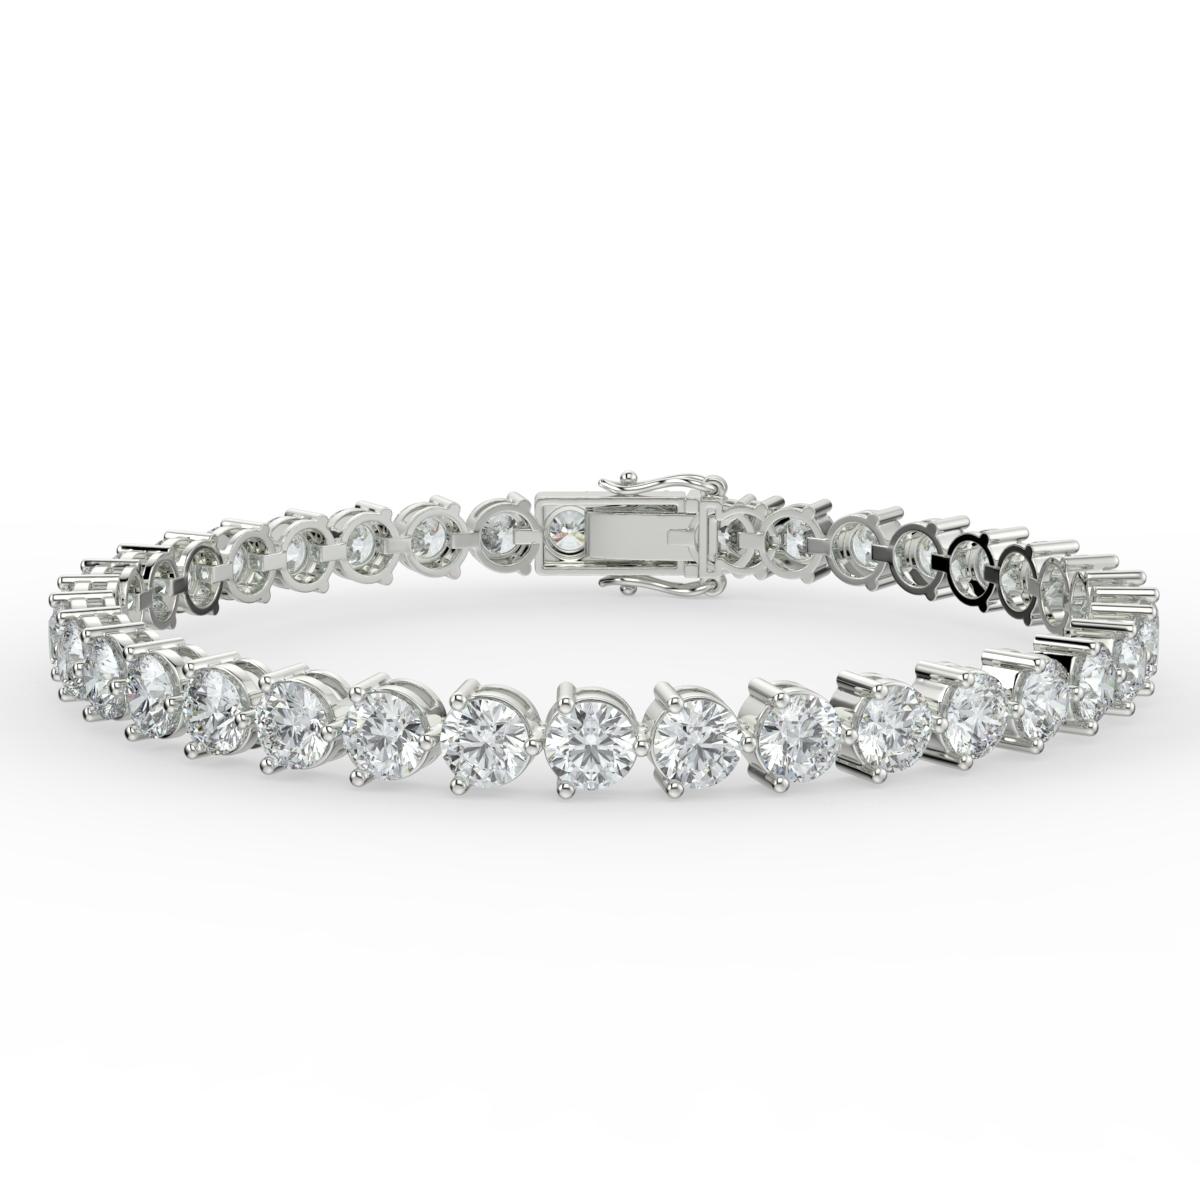 Sparkle with Elegance: Tennis Bracelet Showcase at Blue Angel Jewellers